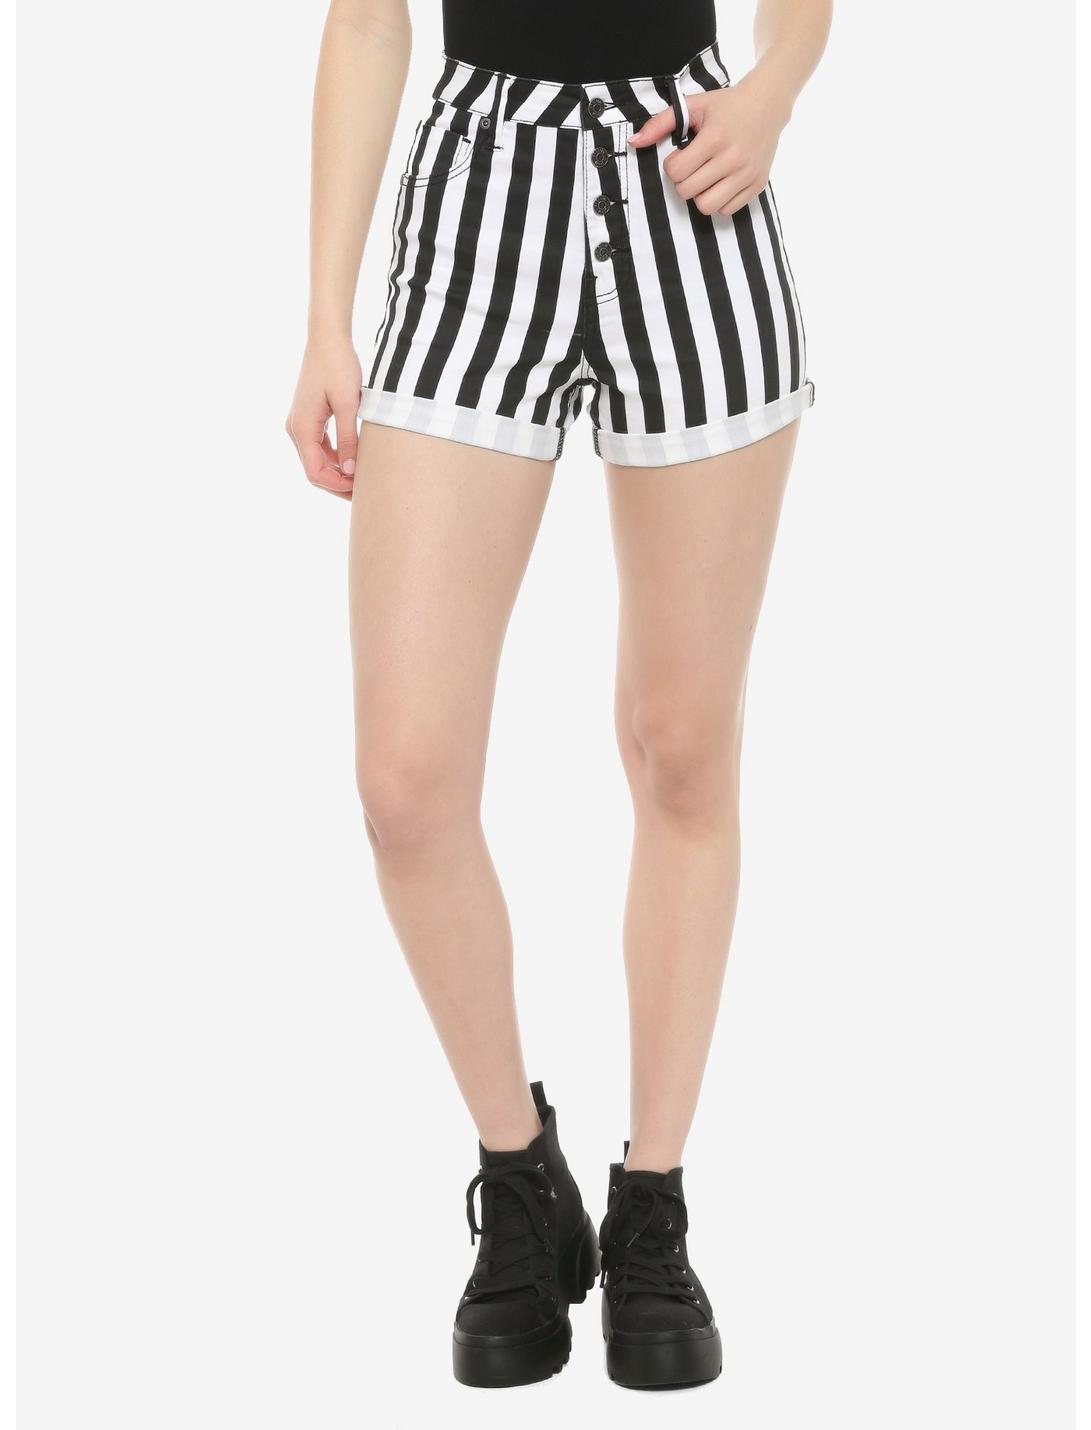 HT Denim Black & White Stripe Ultra Hi-Rise Button-Front Shorts, STRIPE -BLACK, hi-res